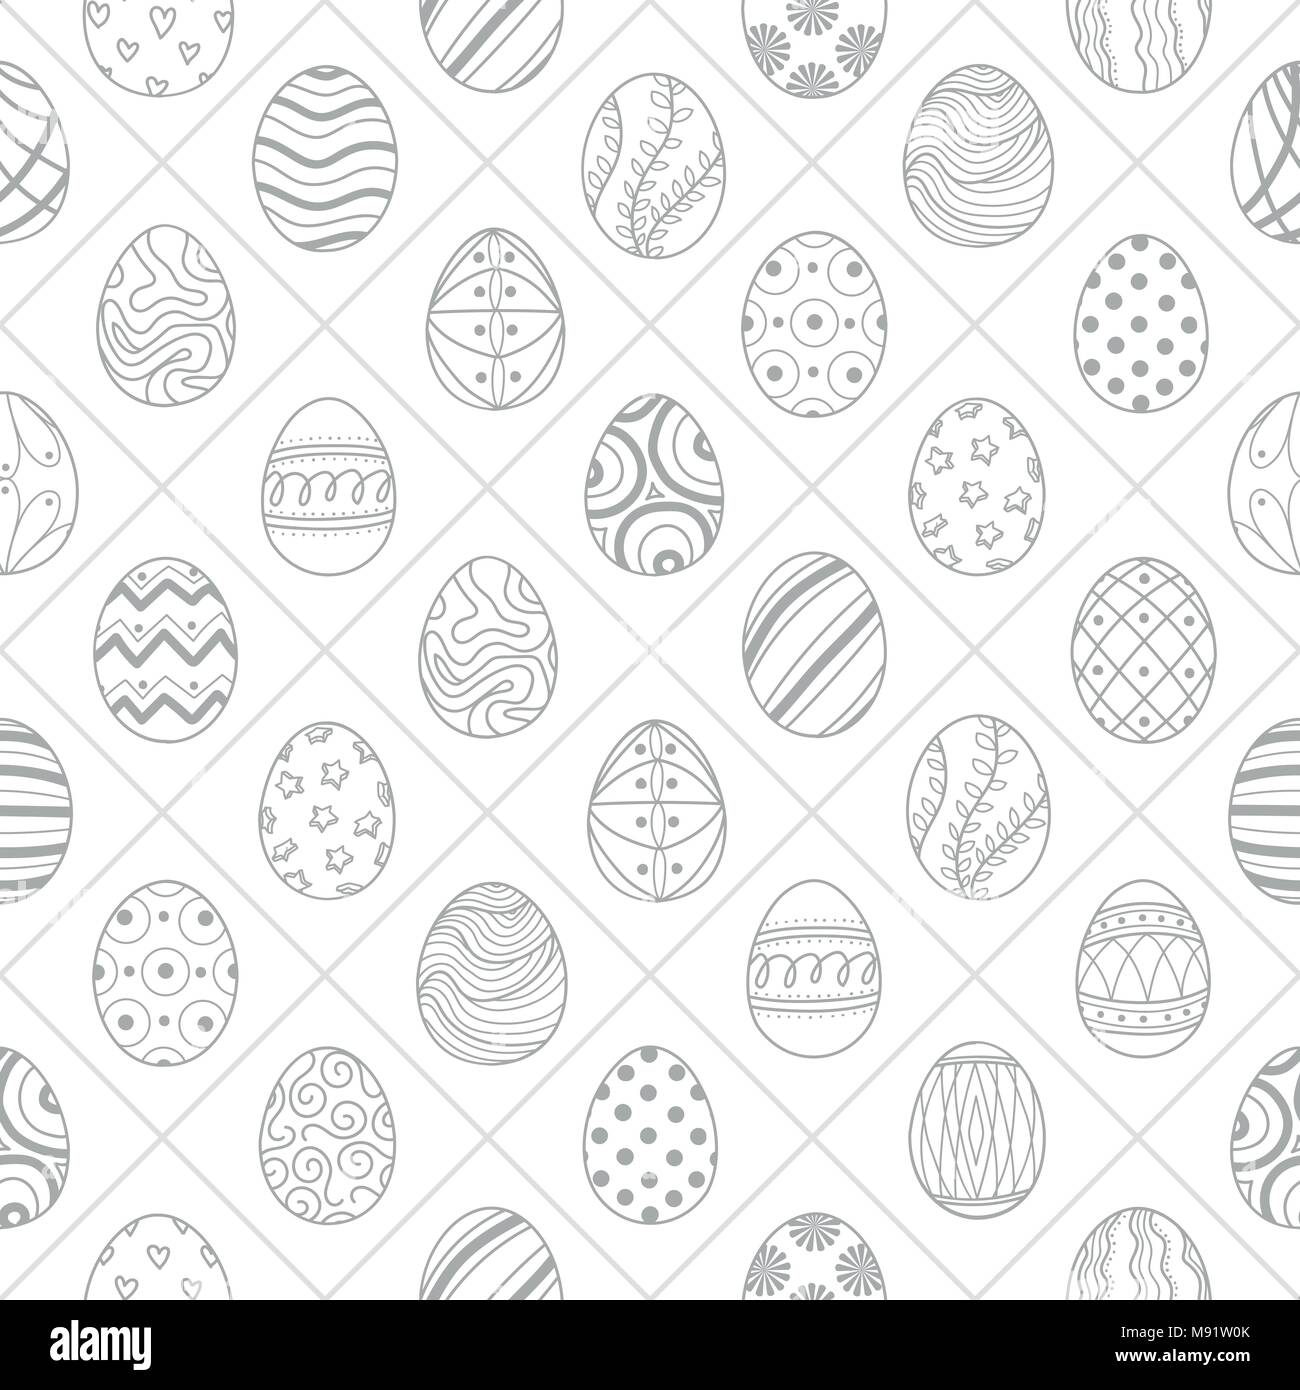 Easter eggs in light gray random on white square background. Cute hand drawn seamless pattern design for Easter festival in vector illustration. Stock Vector